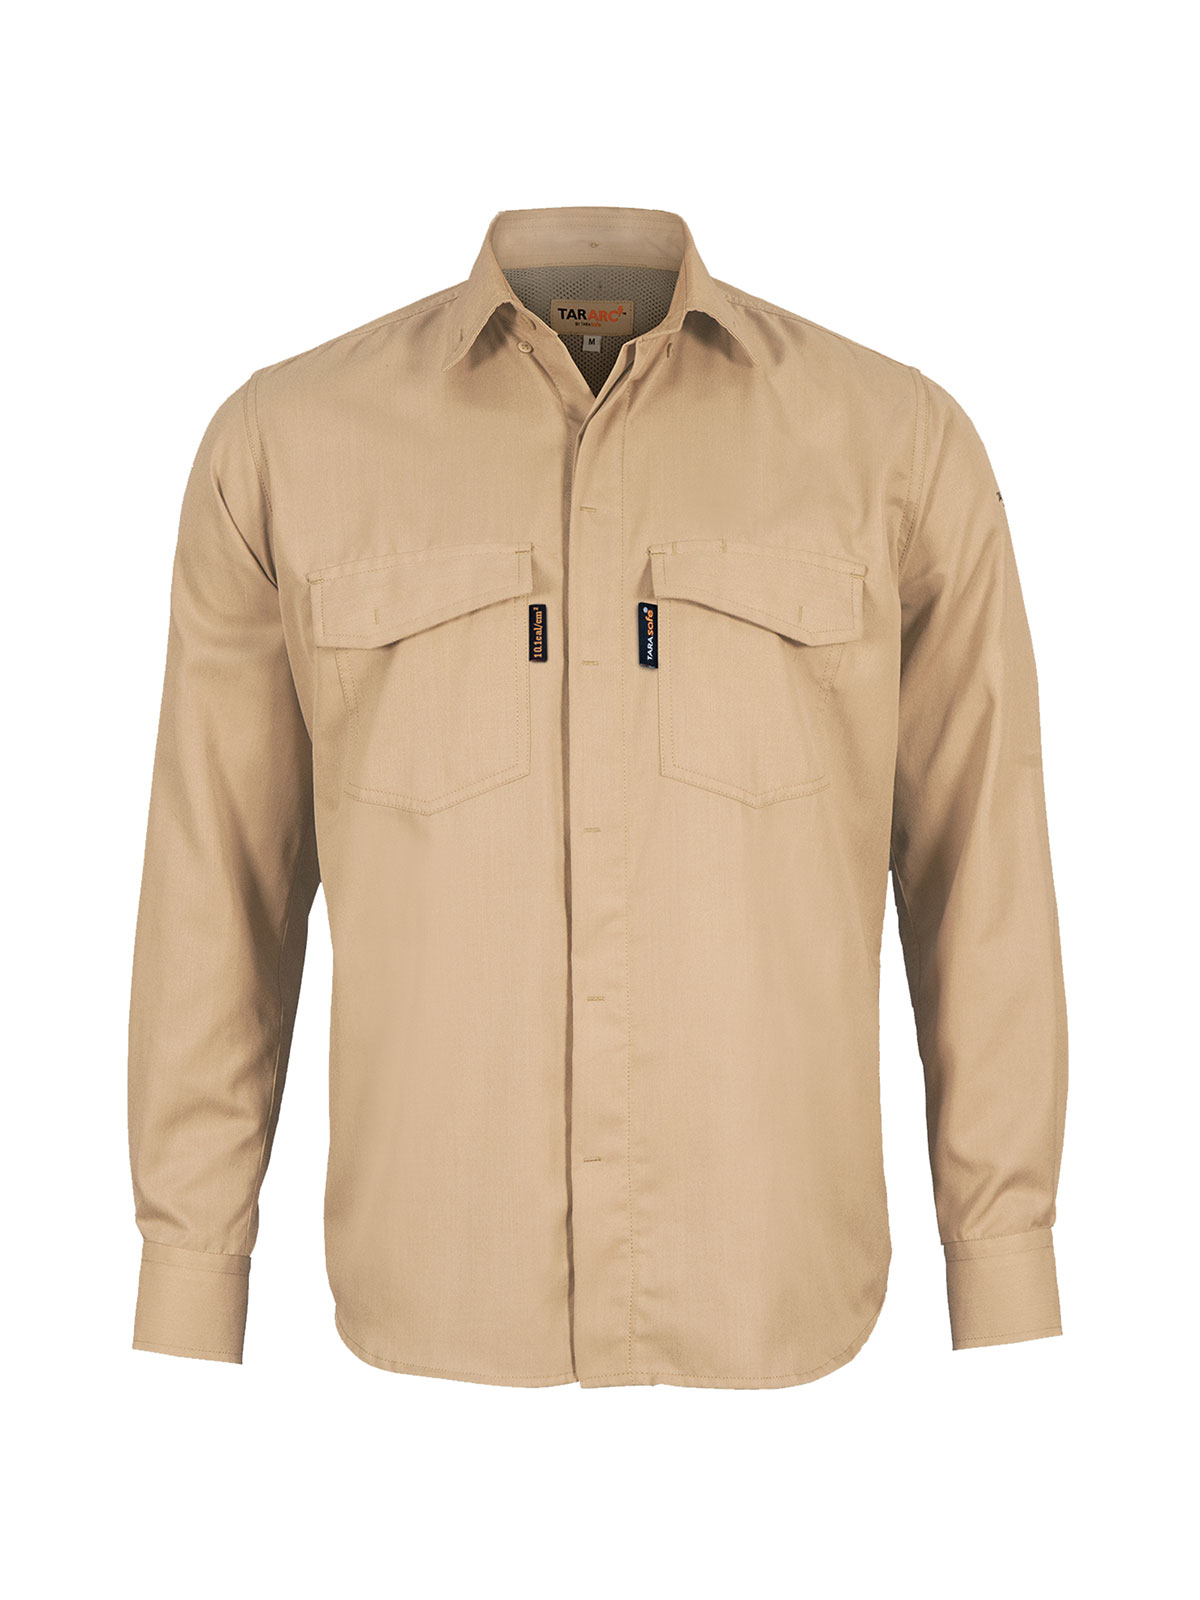 FR Shirts | Affordable & Multipurpose Flame Resistant Shirts